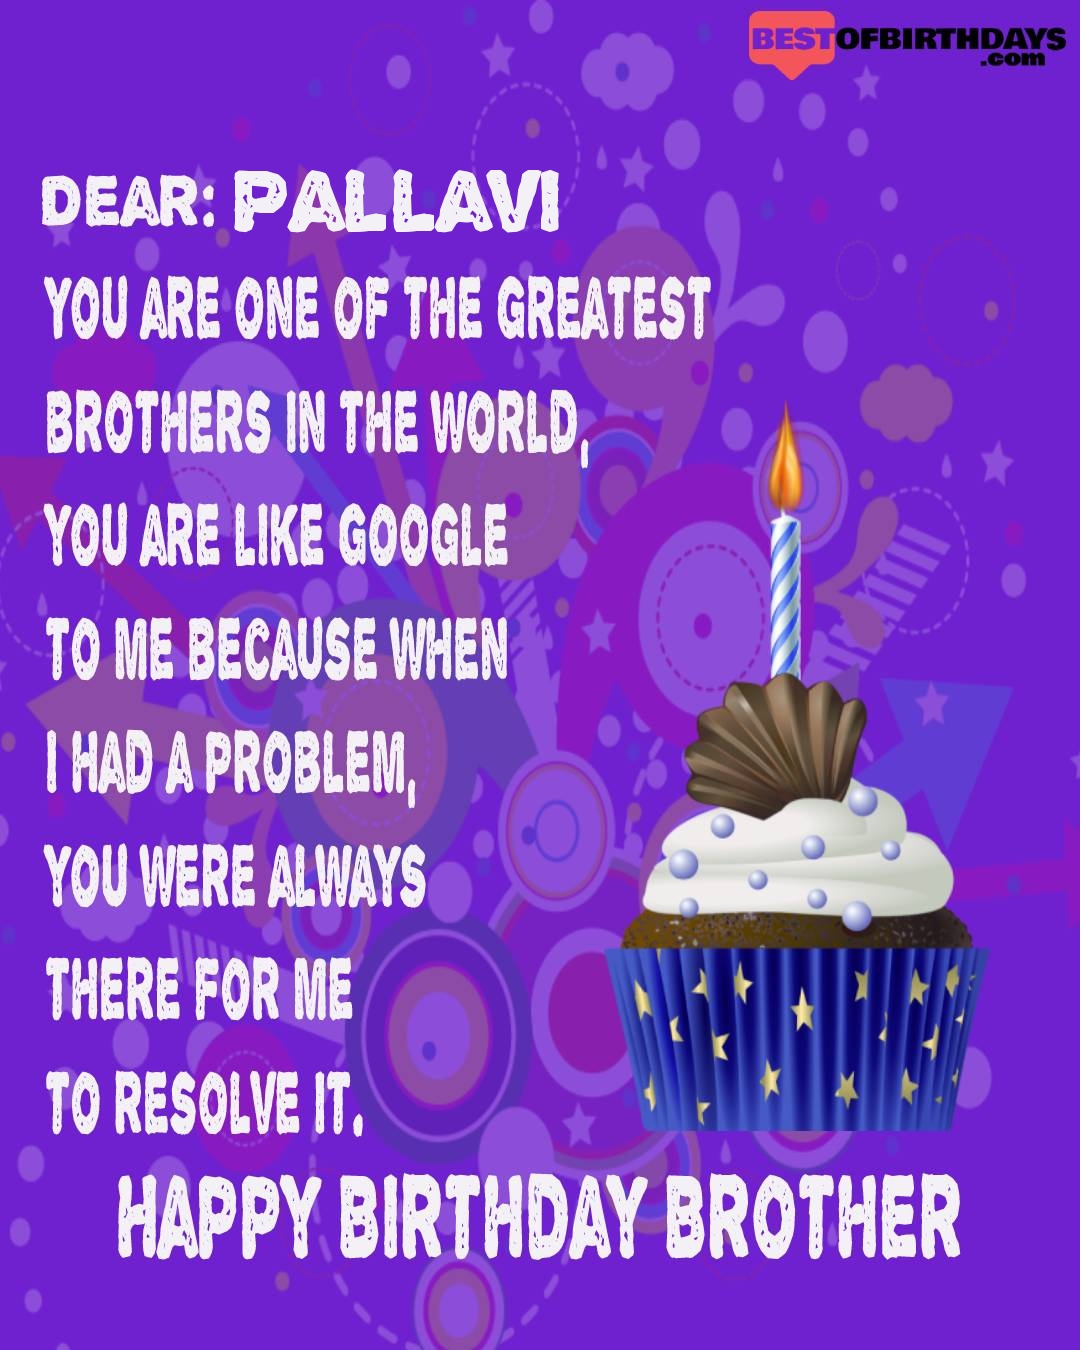 Happy birthday pallavi bhai brother bro